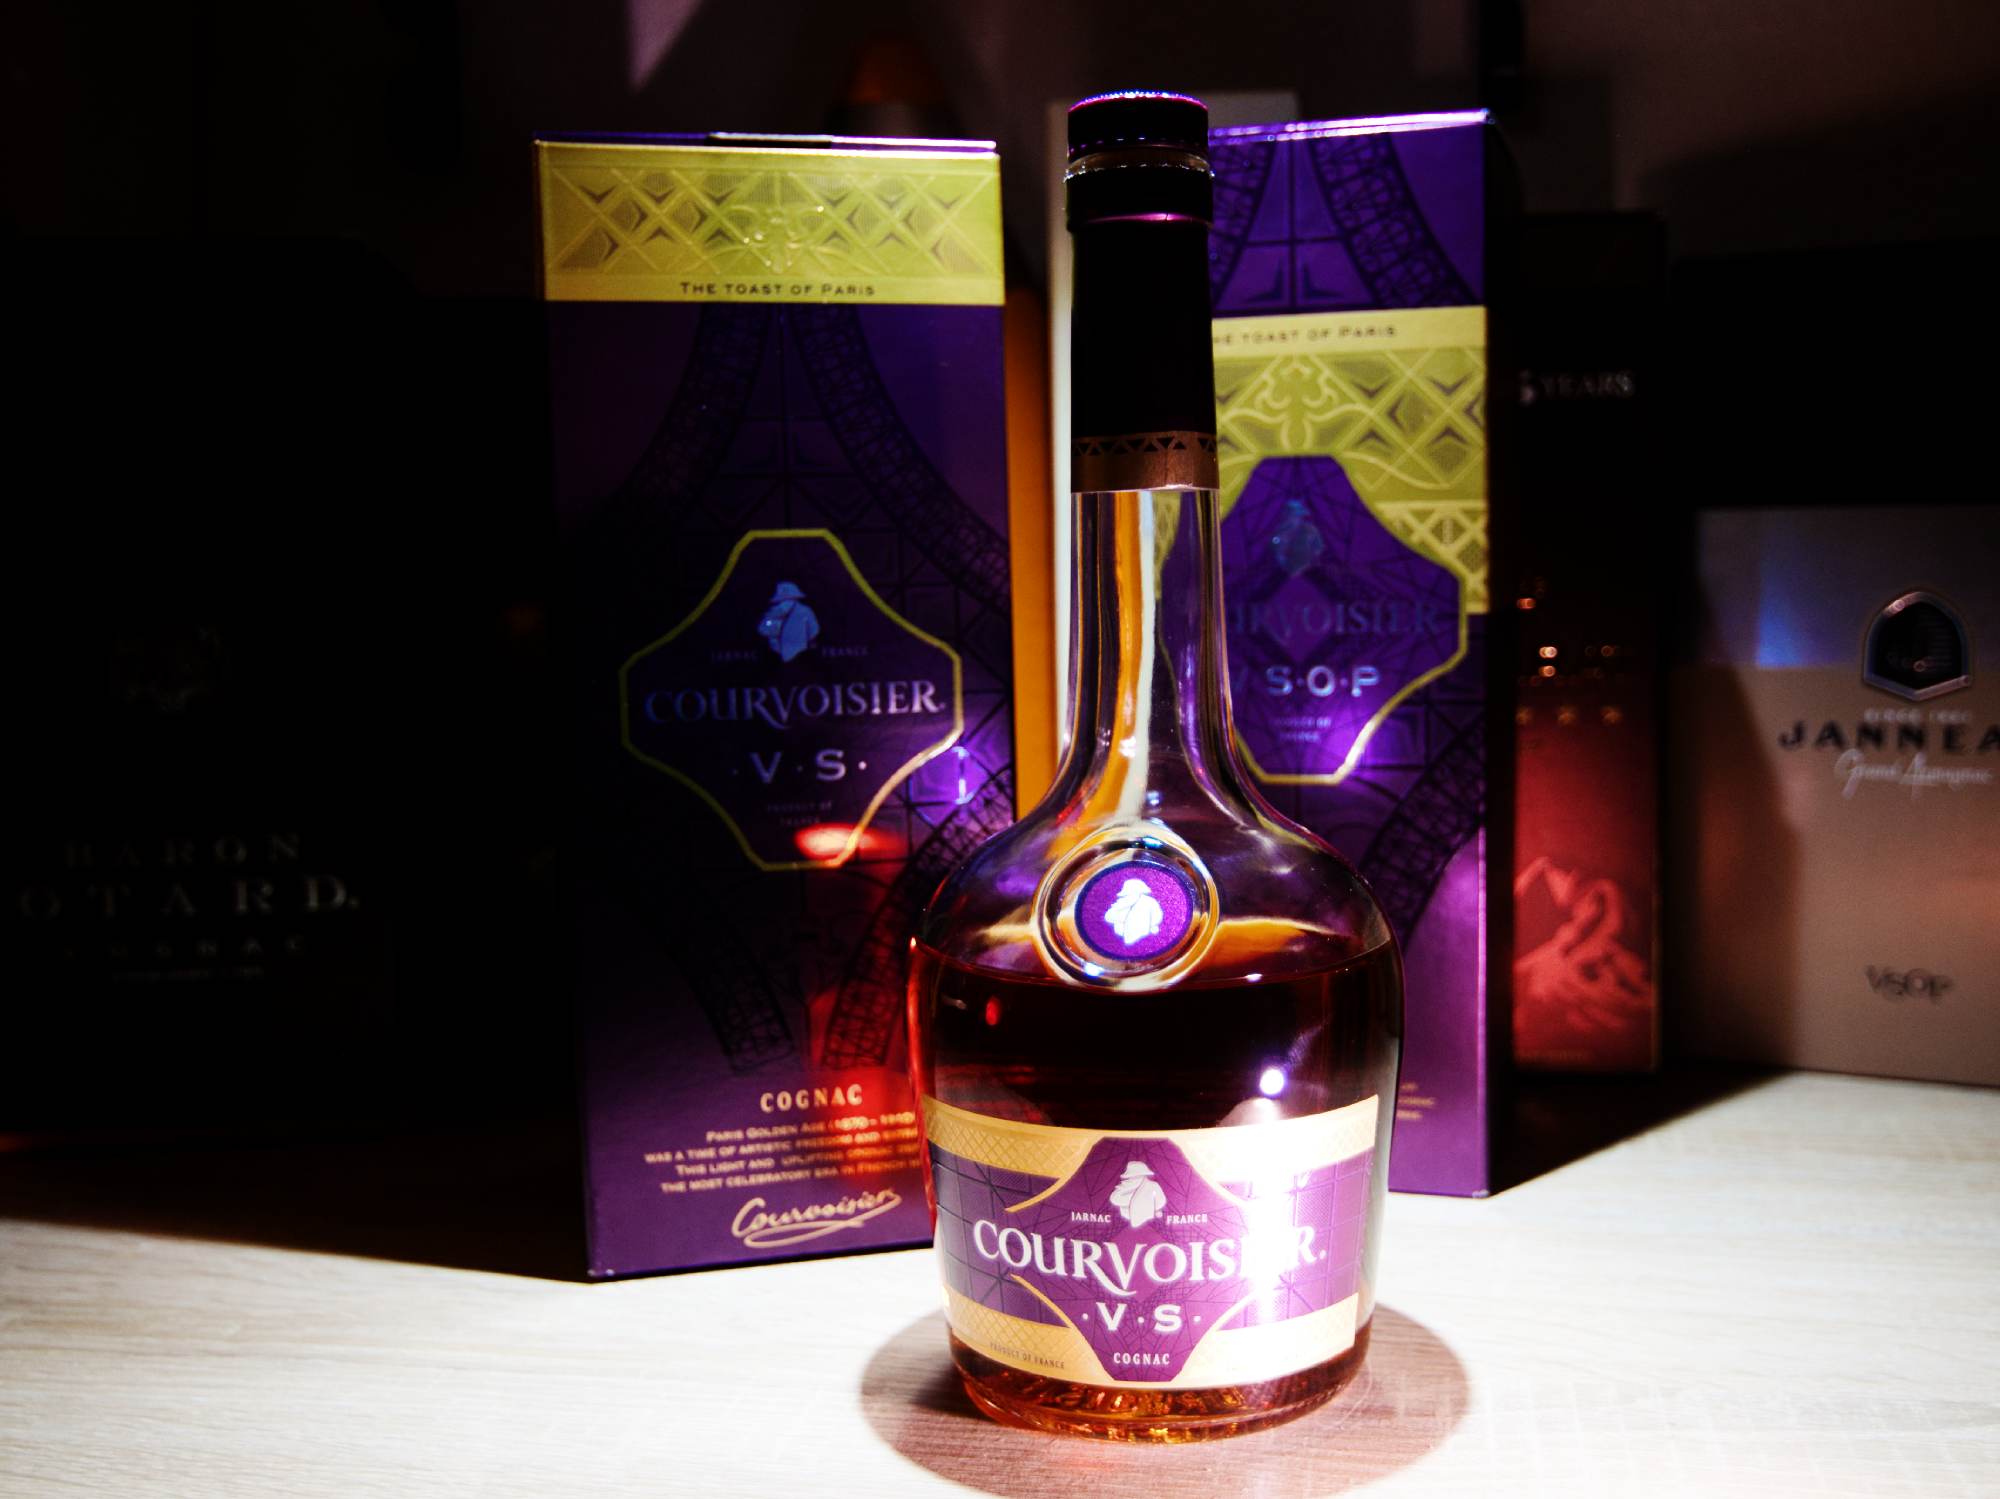 Courvoisier Cognac VS - Very Special - Review